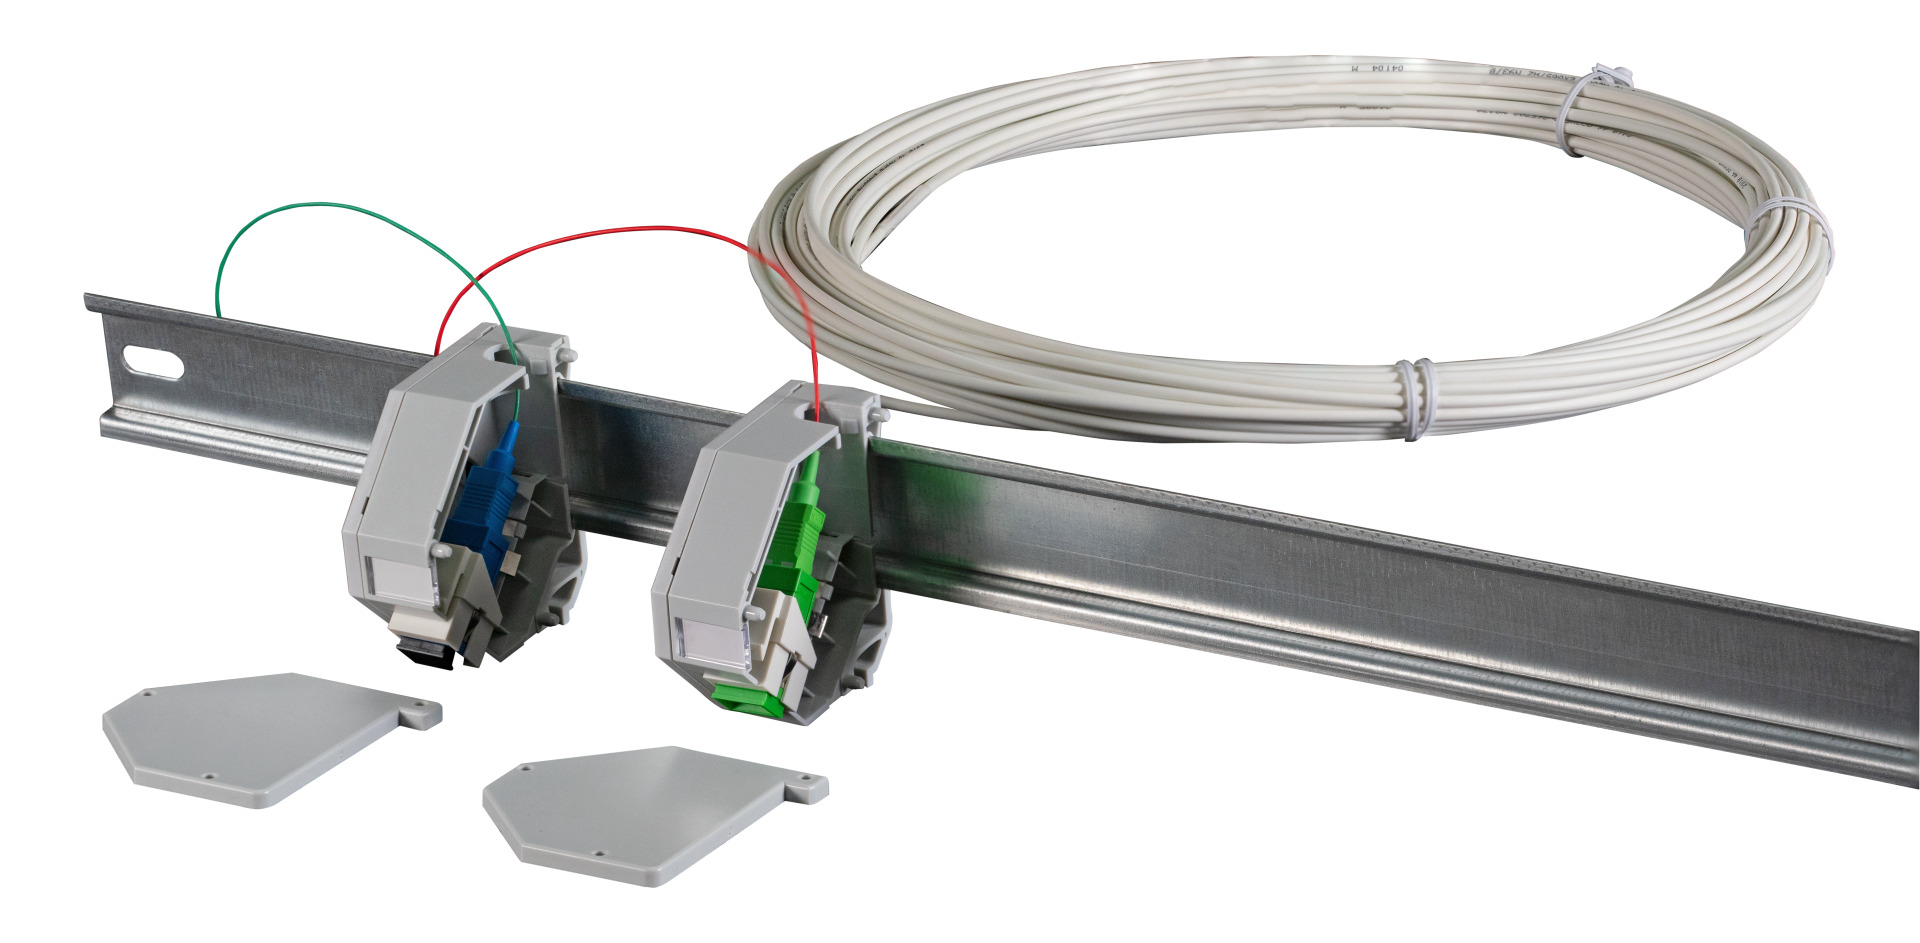 Drop Kabel SC-SC/APC einseitig konfektioniert,SM G657A2, 2 Fasrig, weiß,Dca, 50m